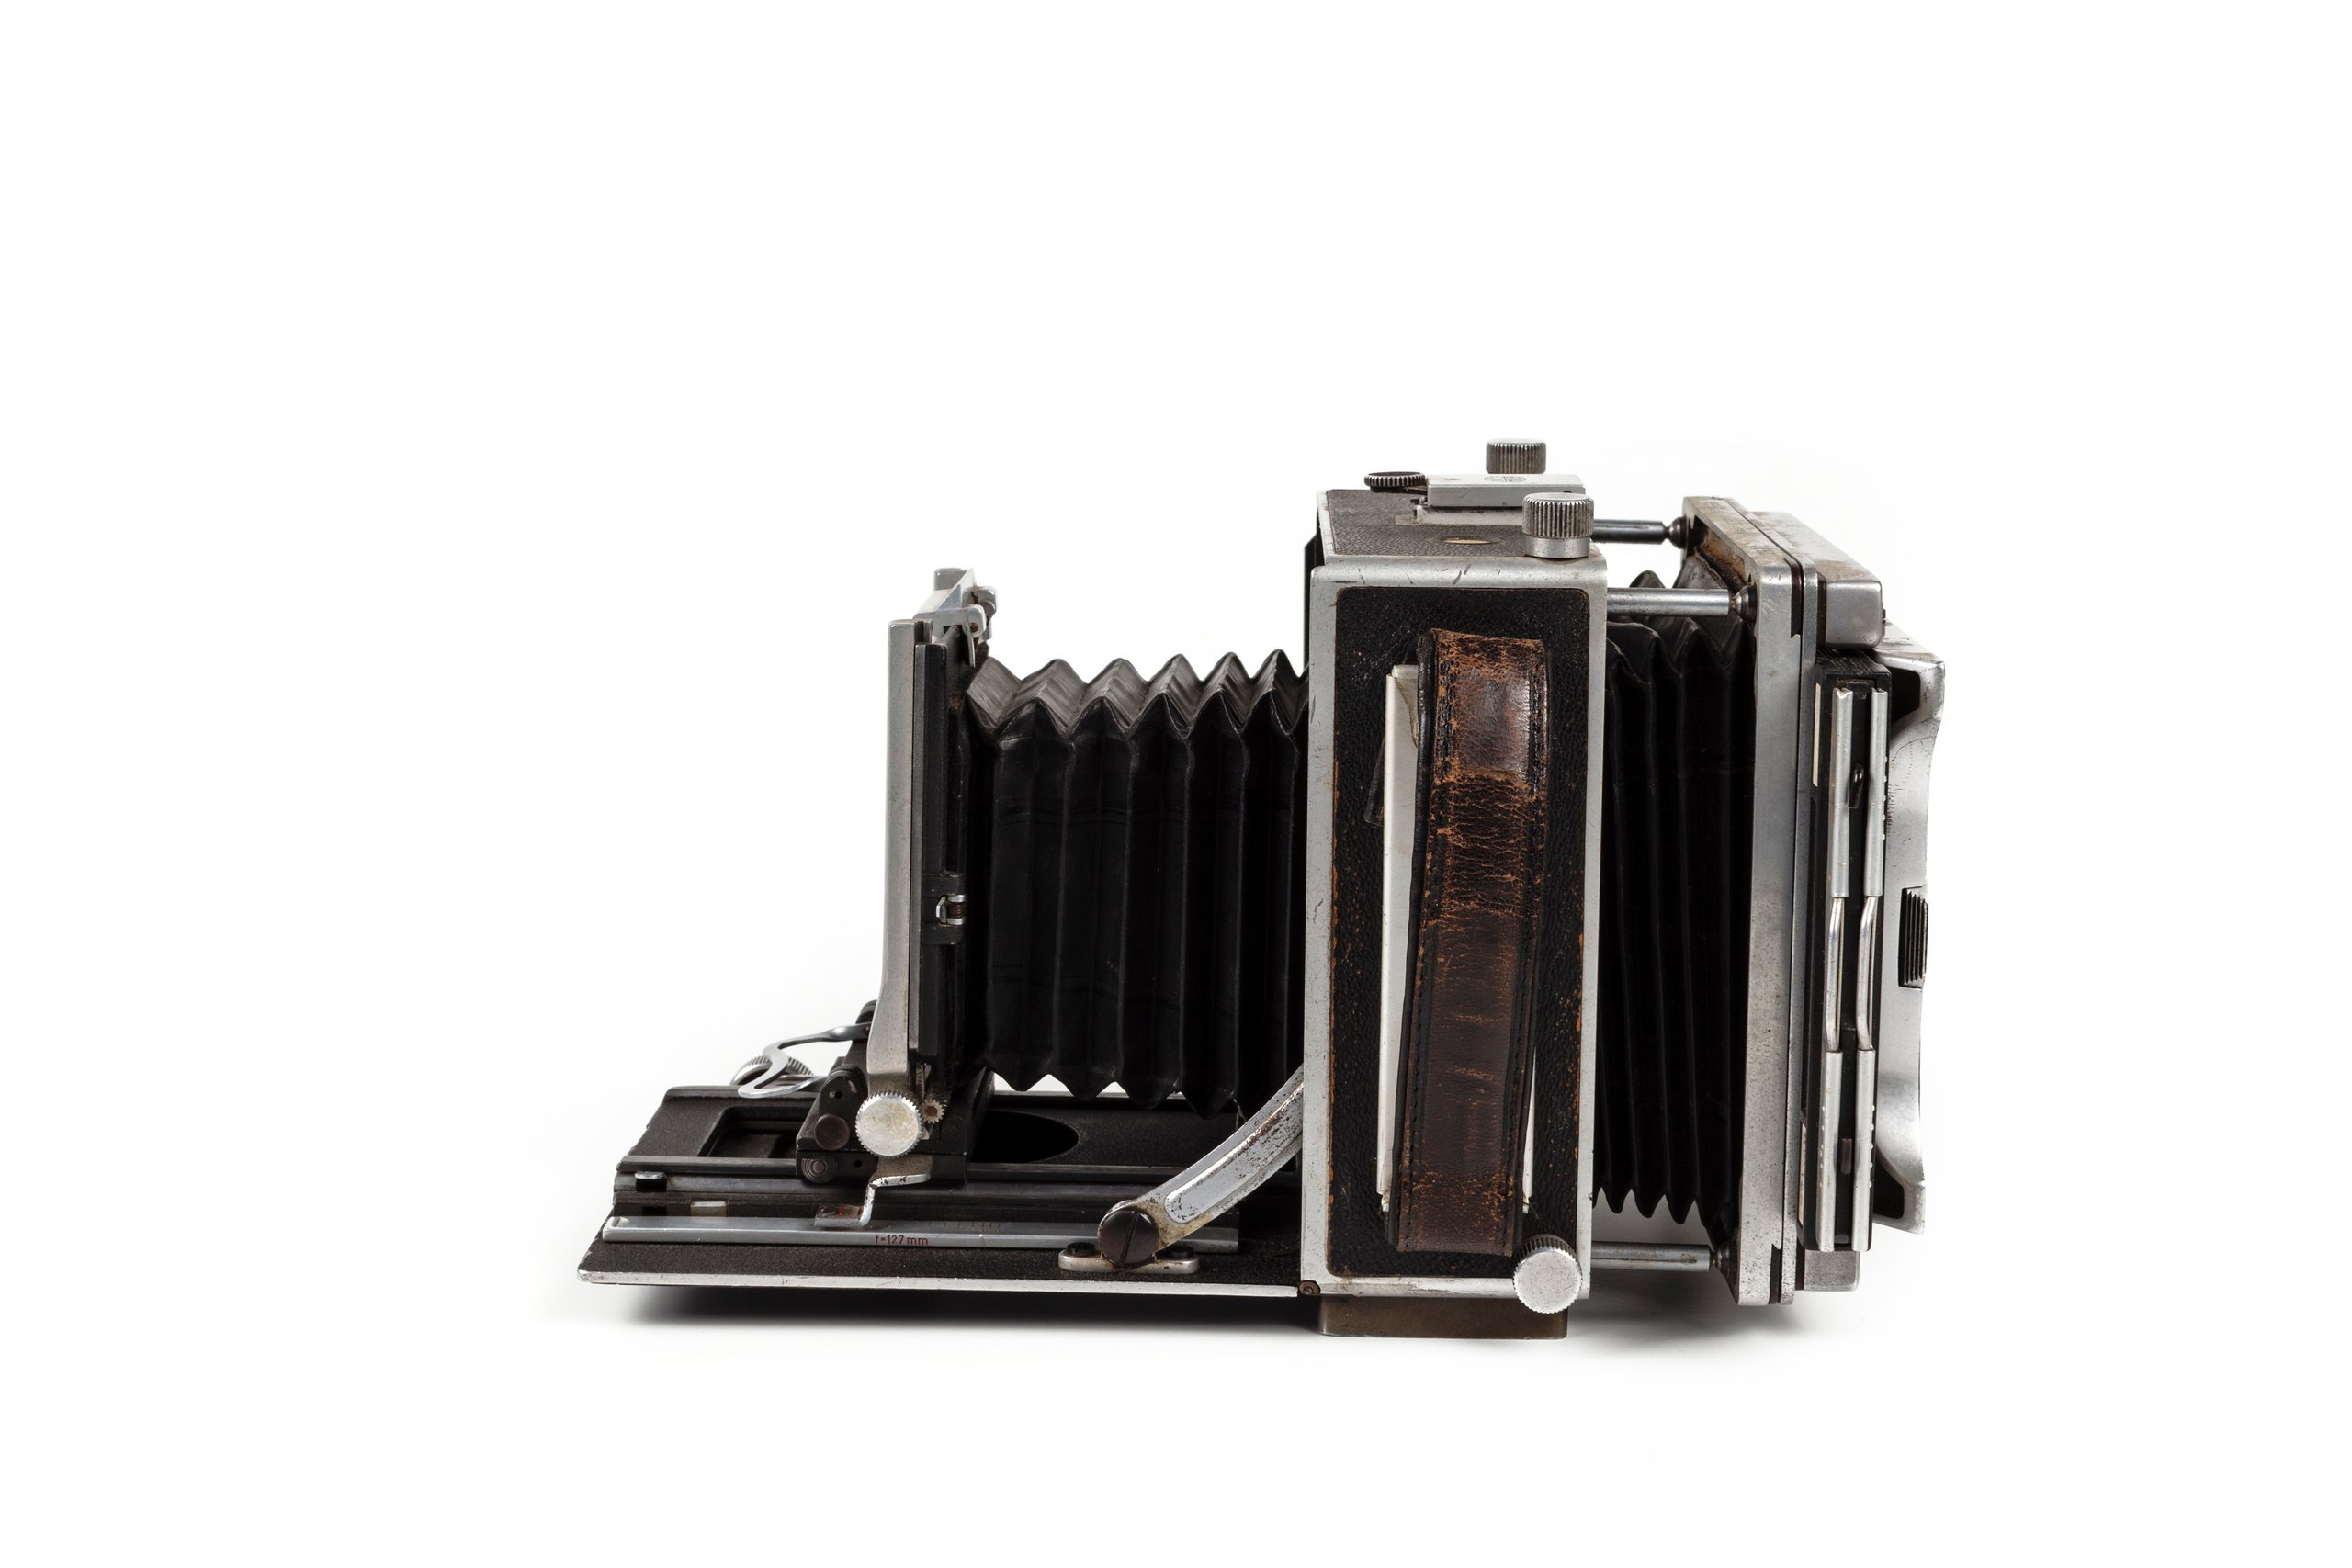 'Linhof Technika' camera used by Max Dupain